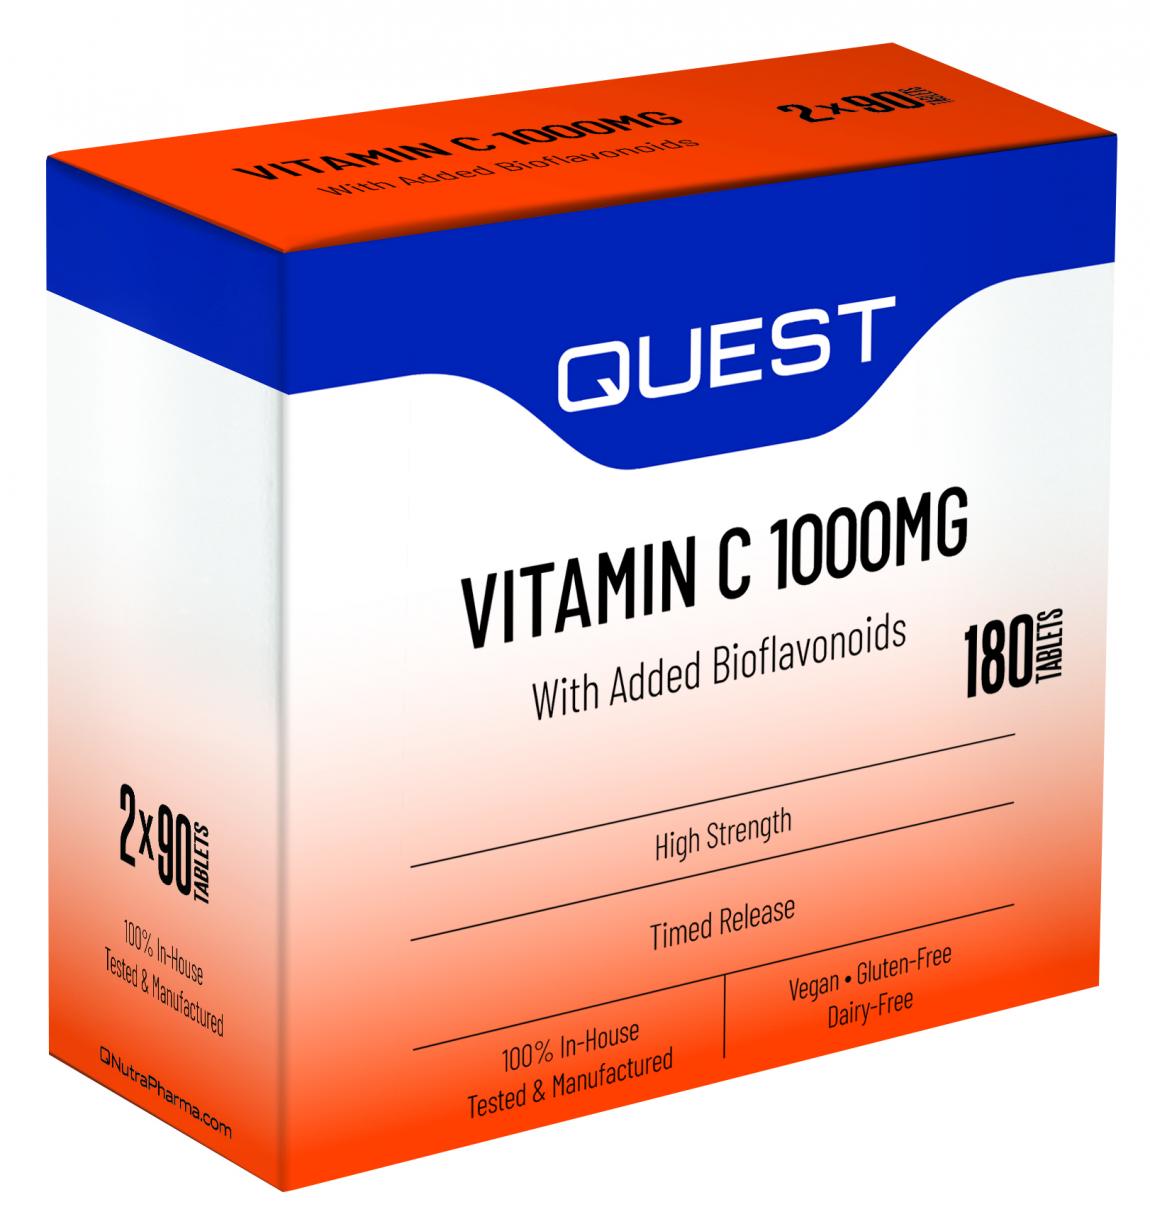 Vitamin C 1000mg With Added Bioflavanoids 180's